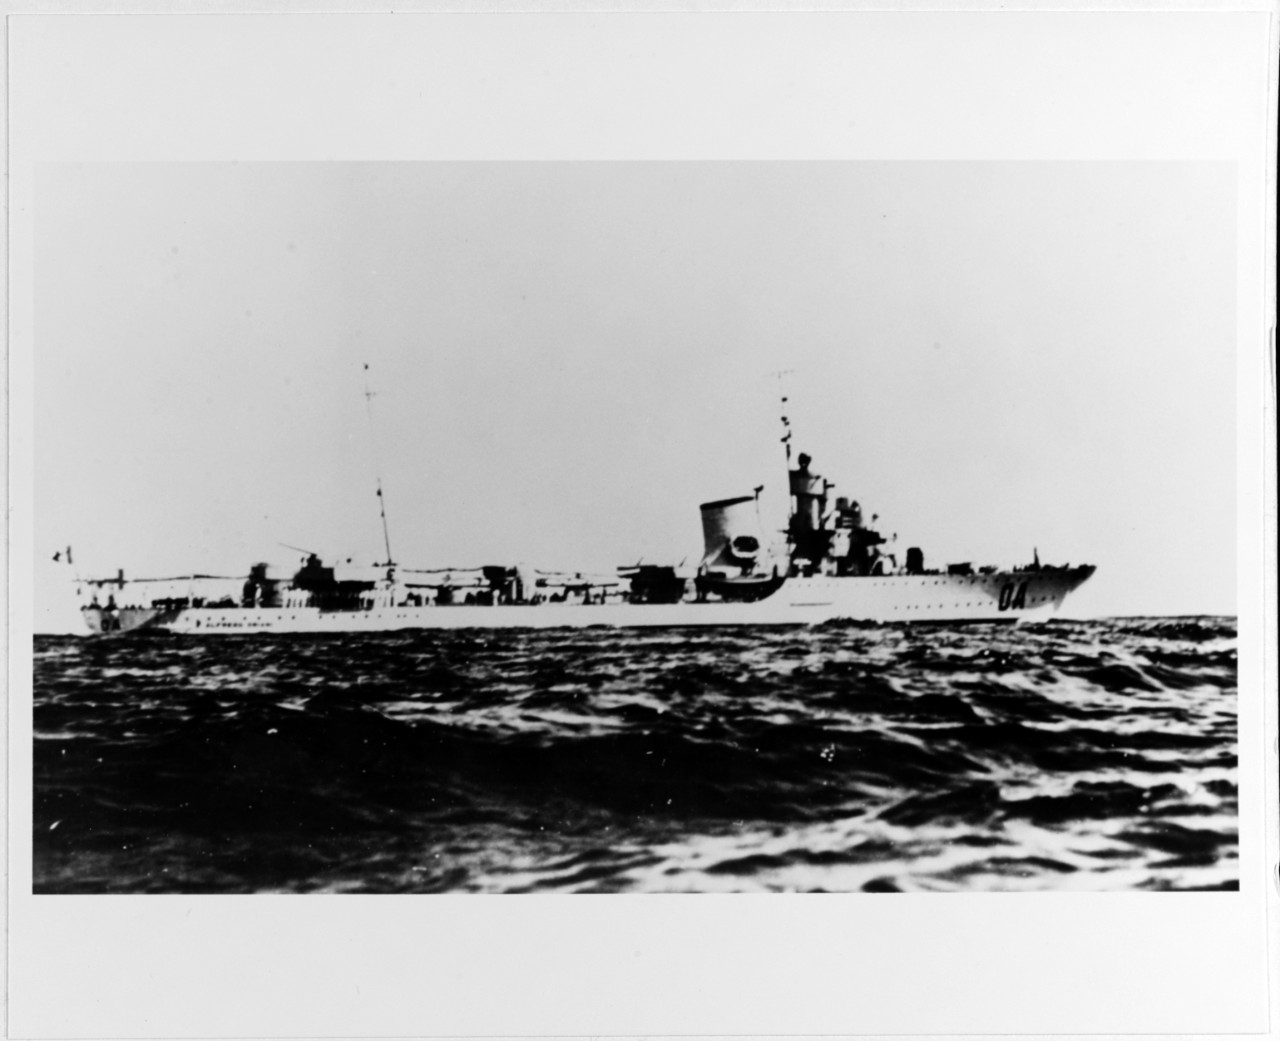 ALFREDO ORIANI (Italian Destroyer, 1936 -1954)